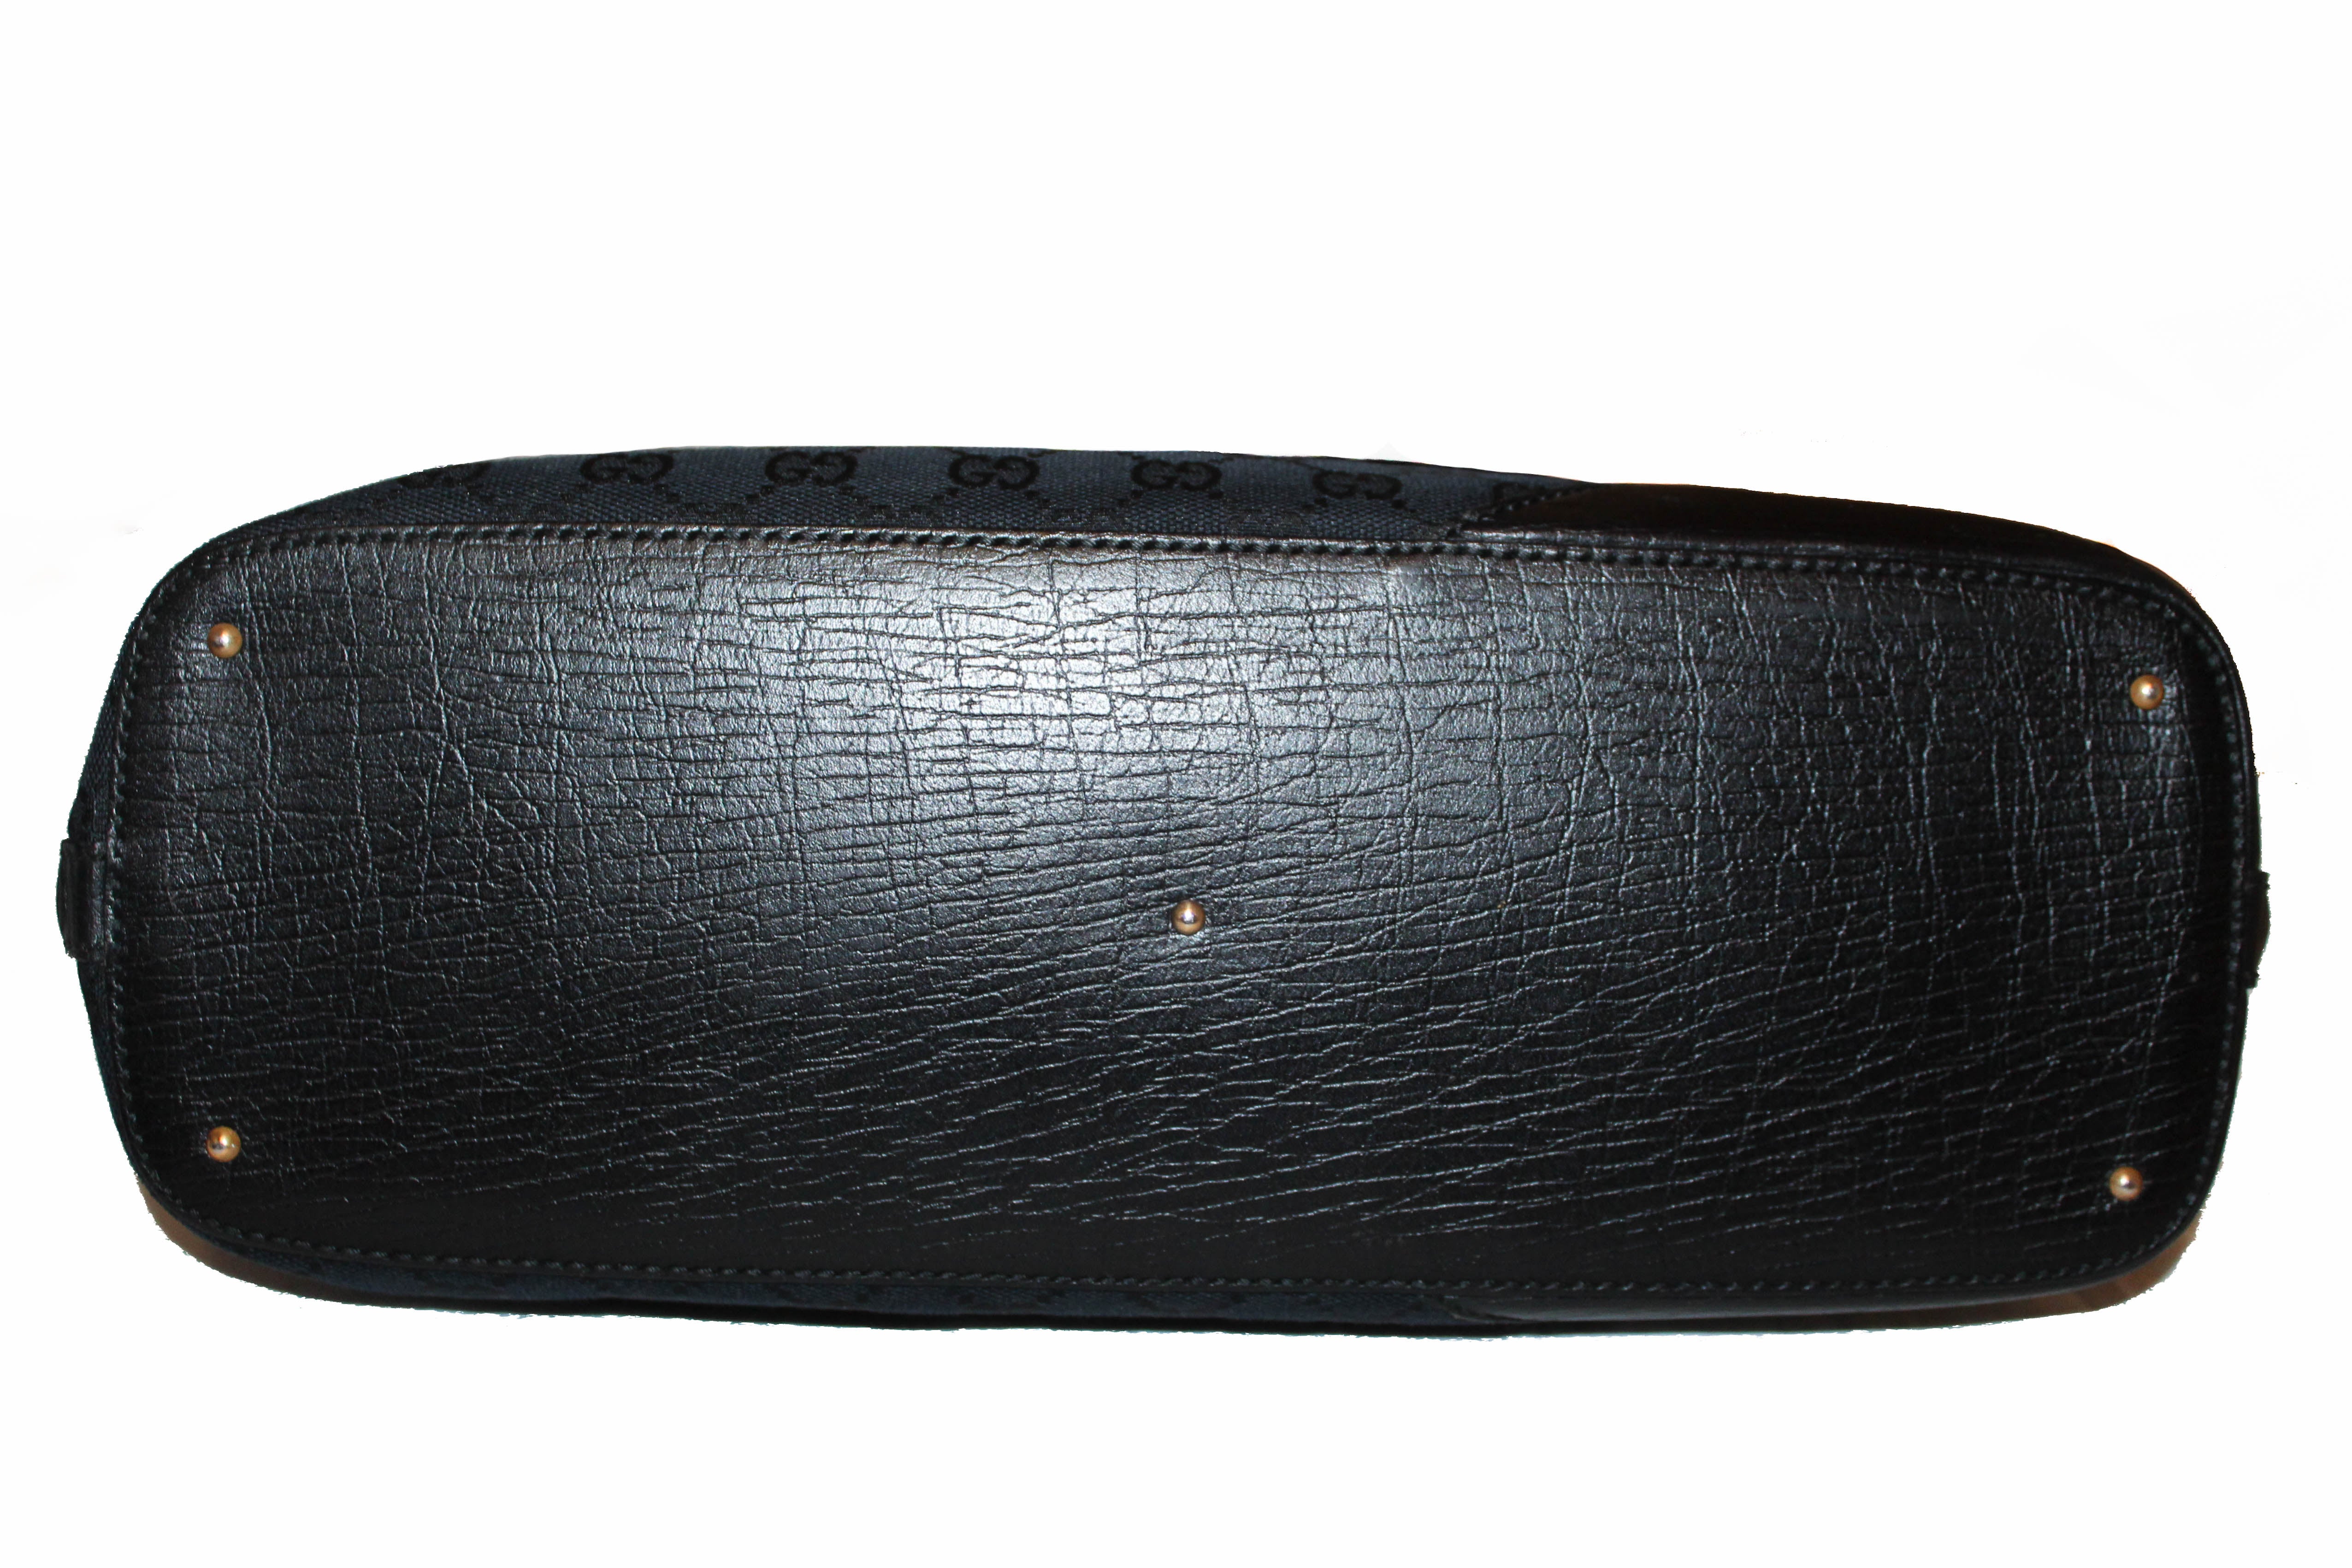 Authentic Gucci Black Signature GG Fabric Canvas Horsebit Tote Bag